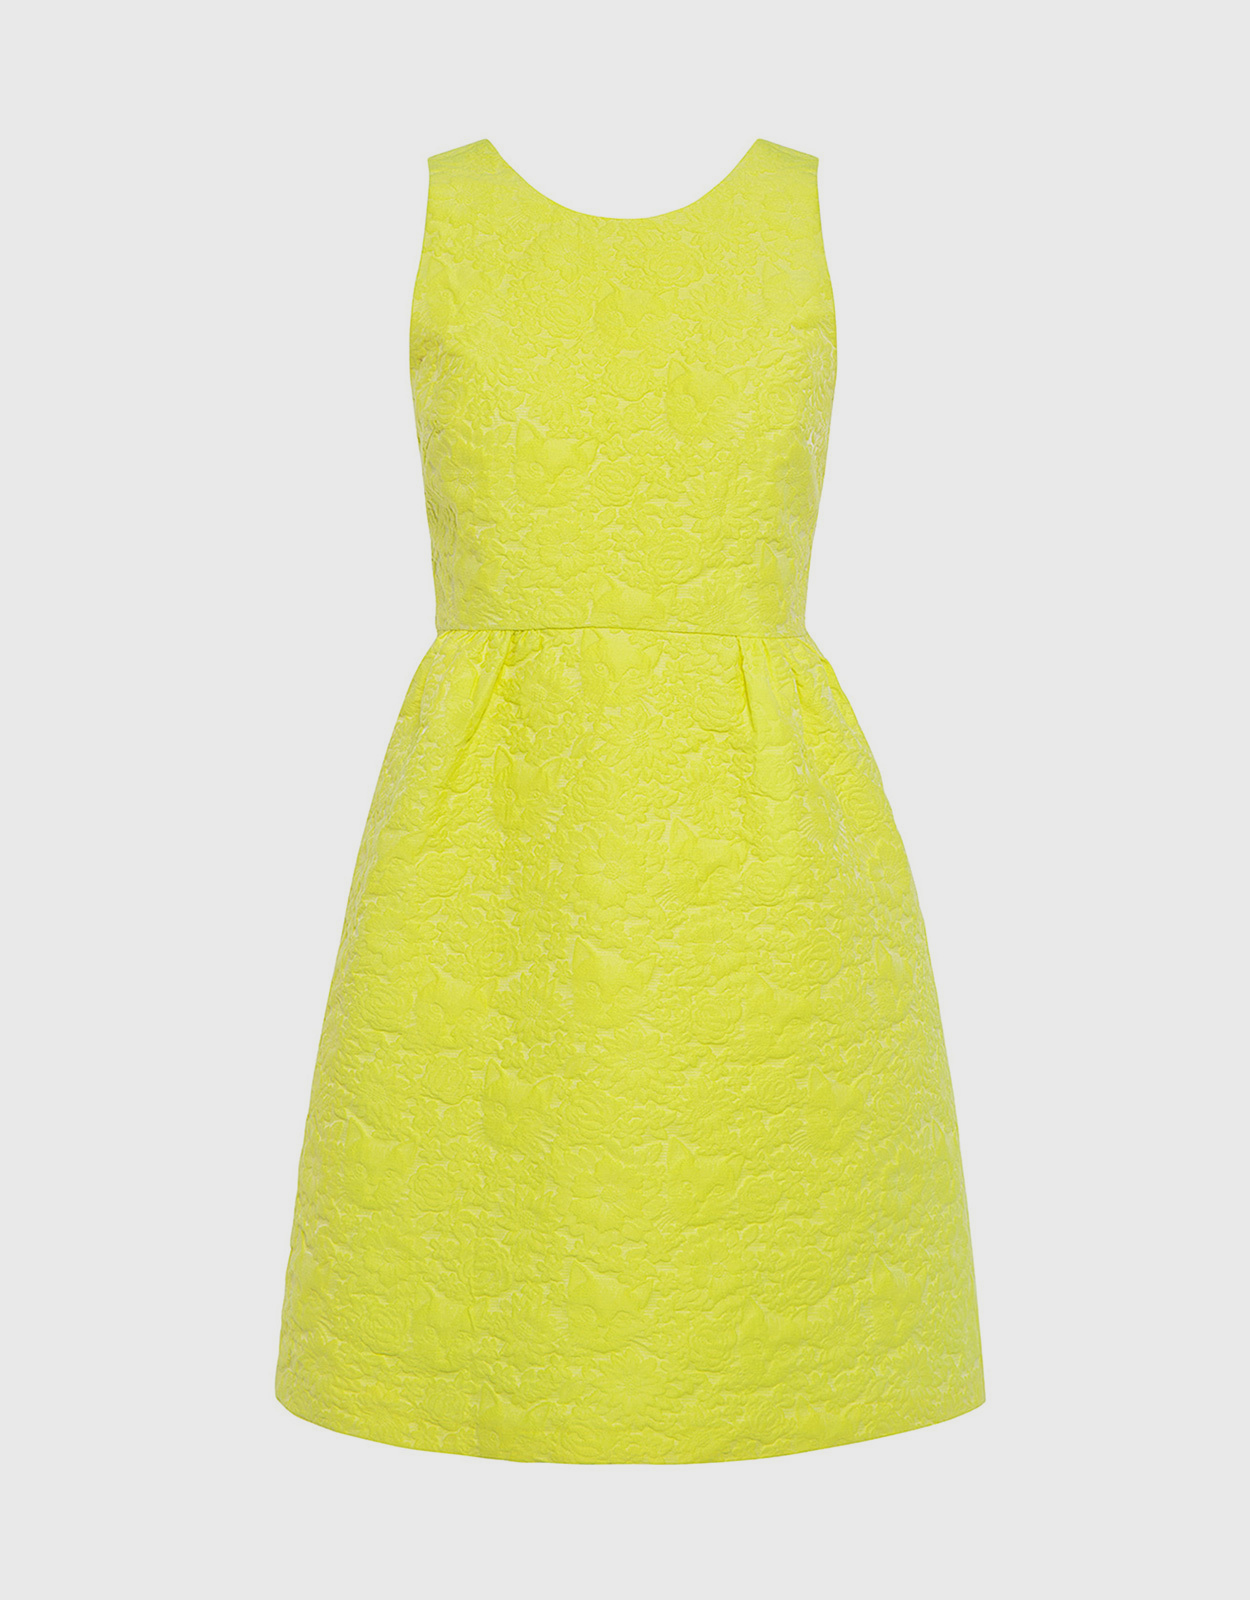 Sunny Yellow Tea Dress